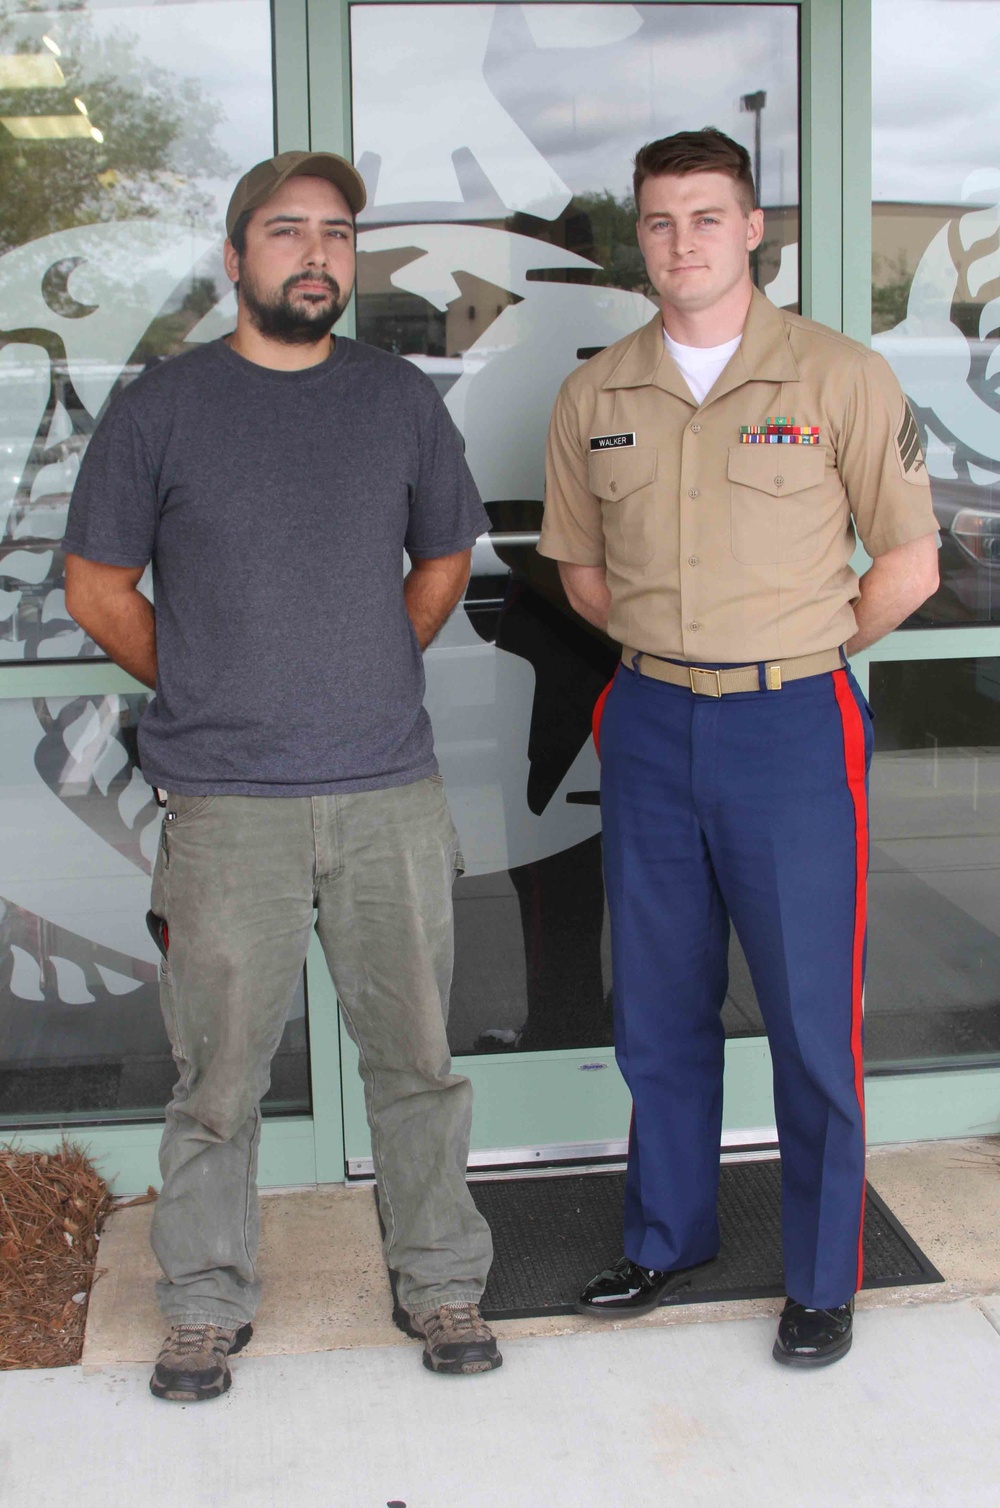 Polish Seaman joins Marine Corps